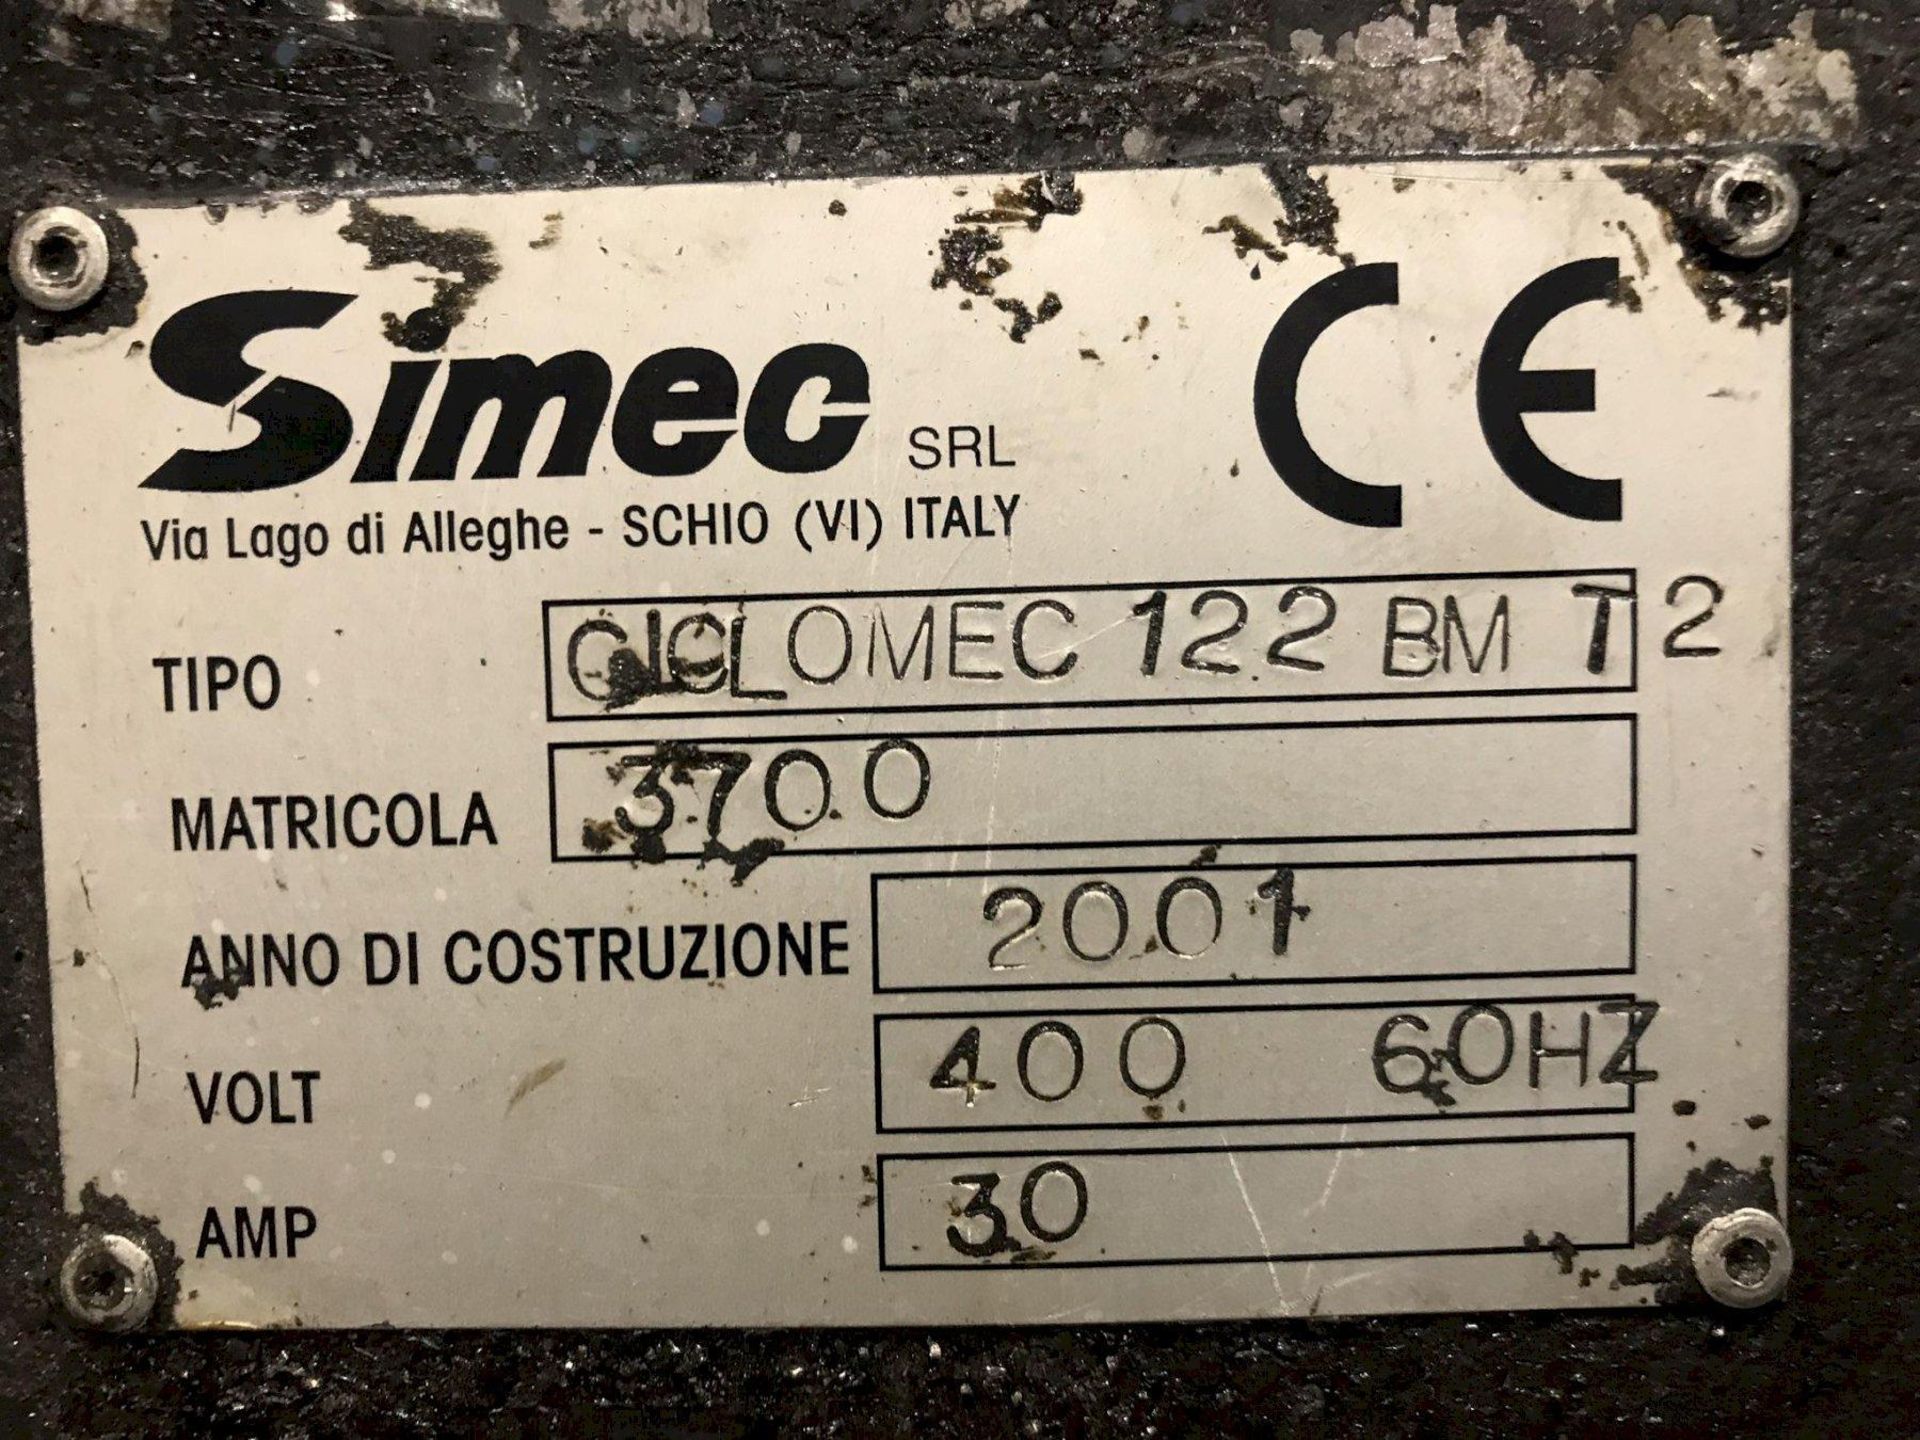 Simec Model Ciclomec 122 Automatic Cold Saw - Image 10 of 10